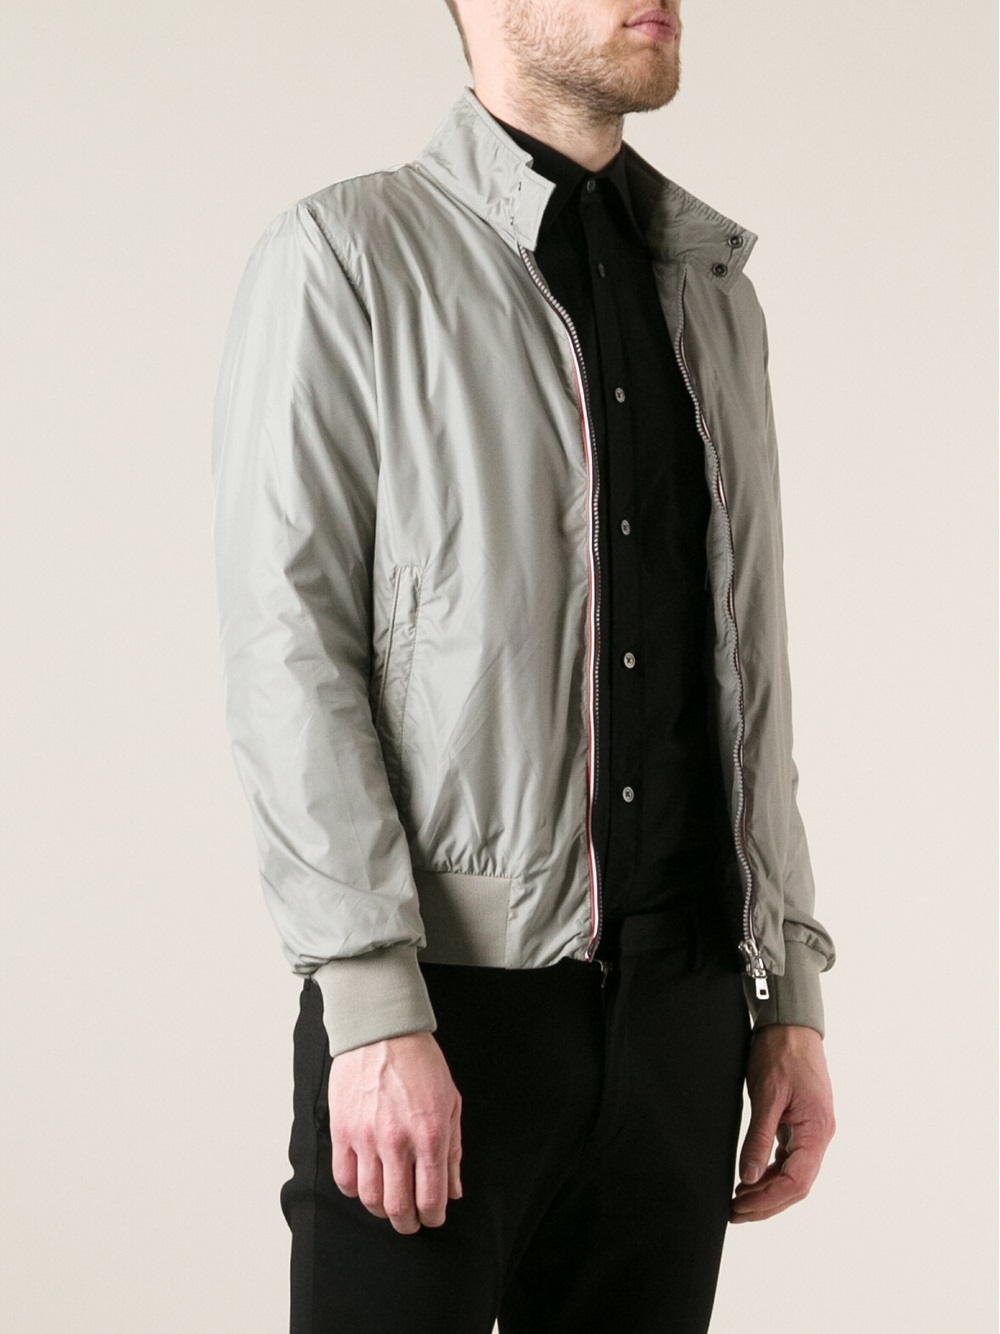 Moncler Darlan Jacket in Grey (Gray) for Men - Lyst